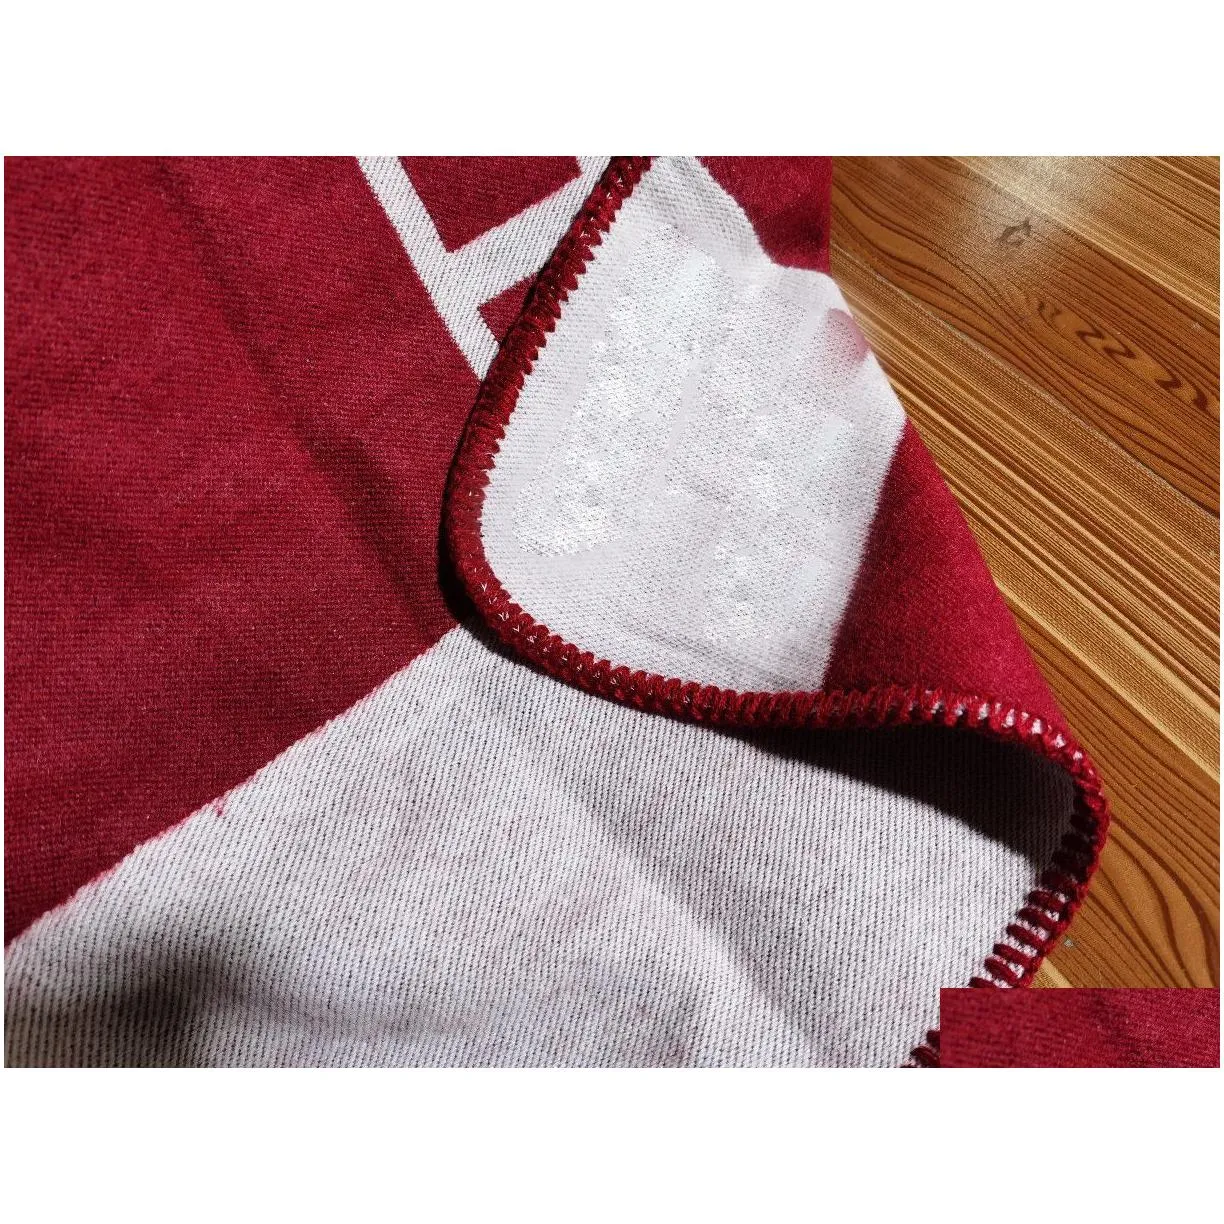 letter blanket soft wool blend scarf shawl portable warm plaid sofa bed fleece towel spring autumn women throw blankets